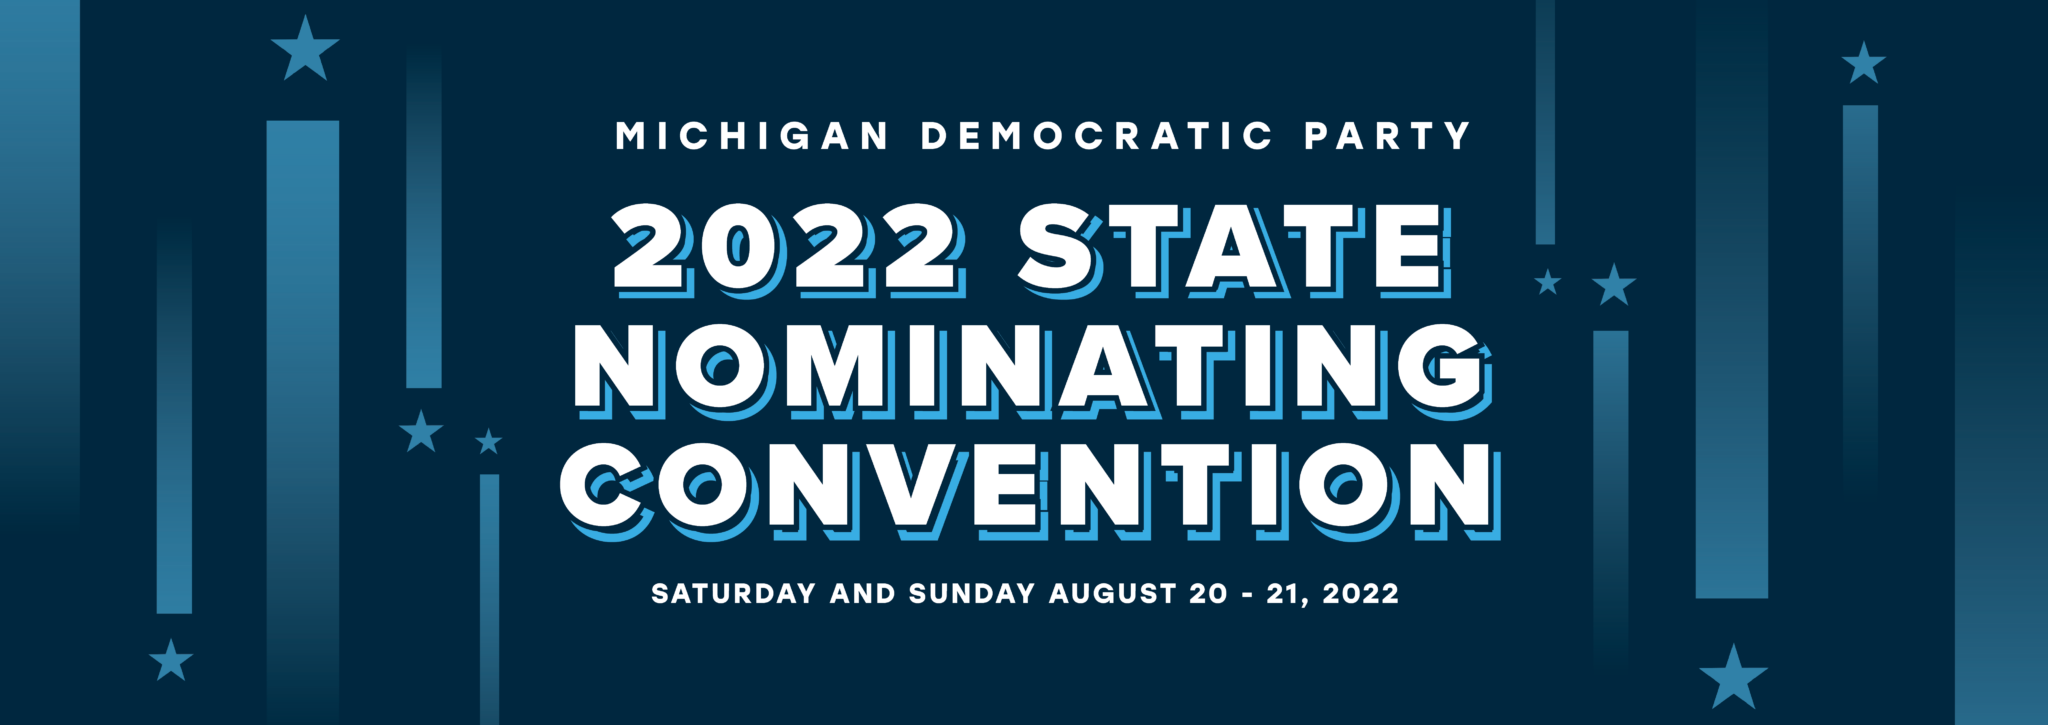 2022 State Convention Michigan Democratic Party